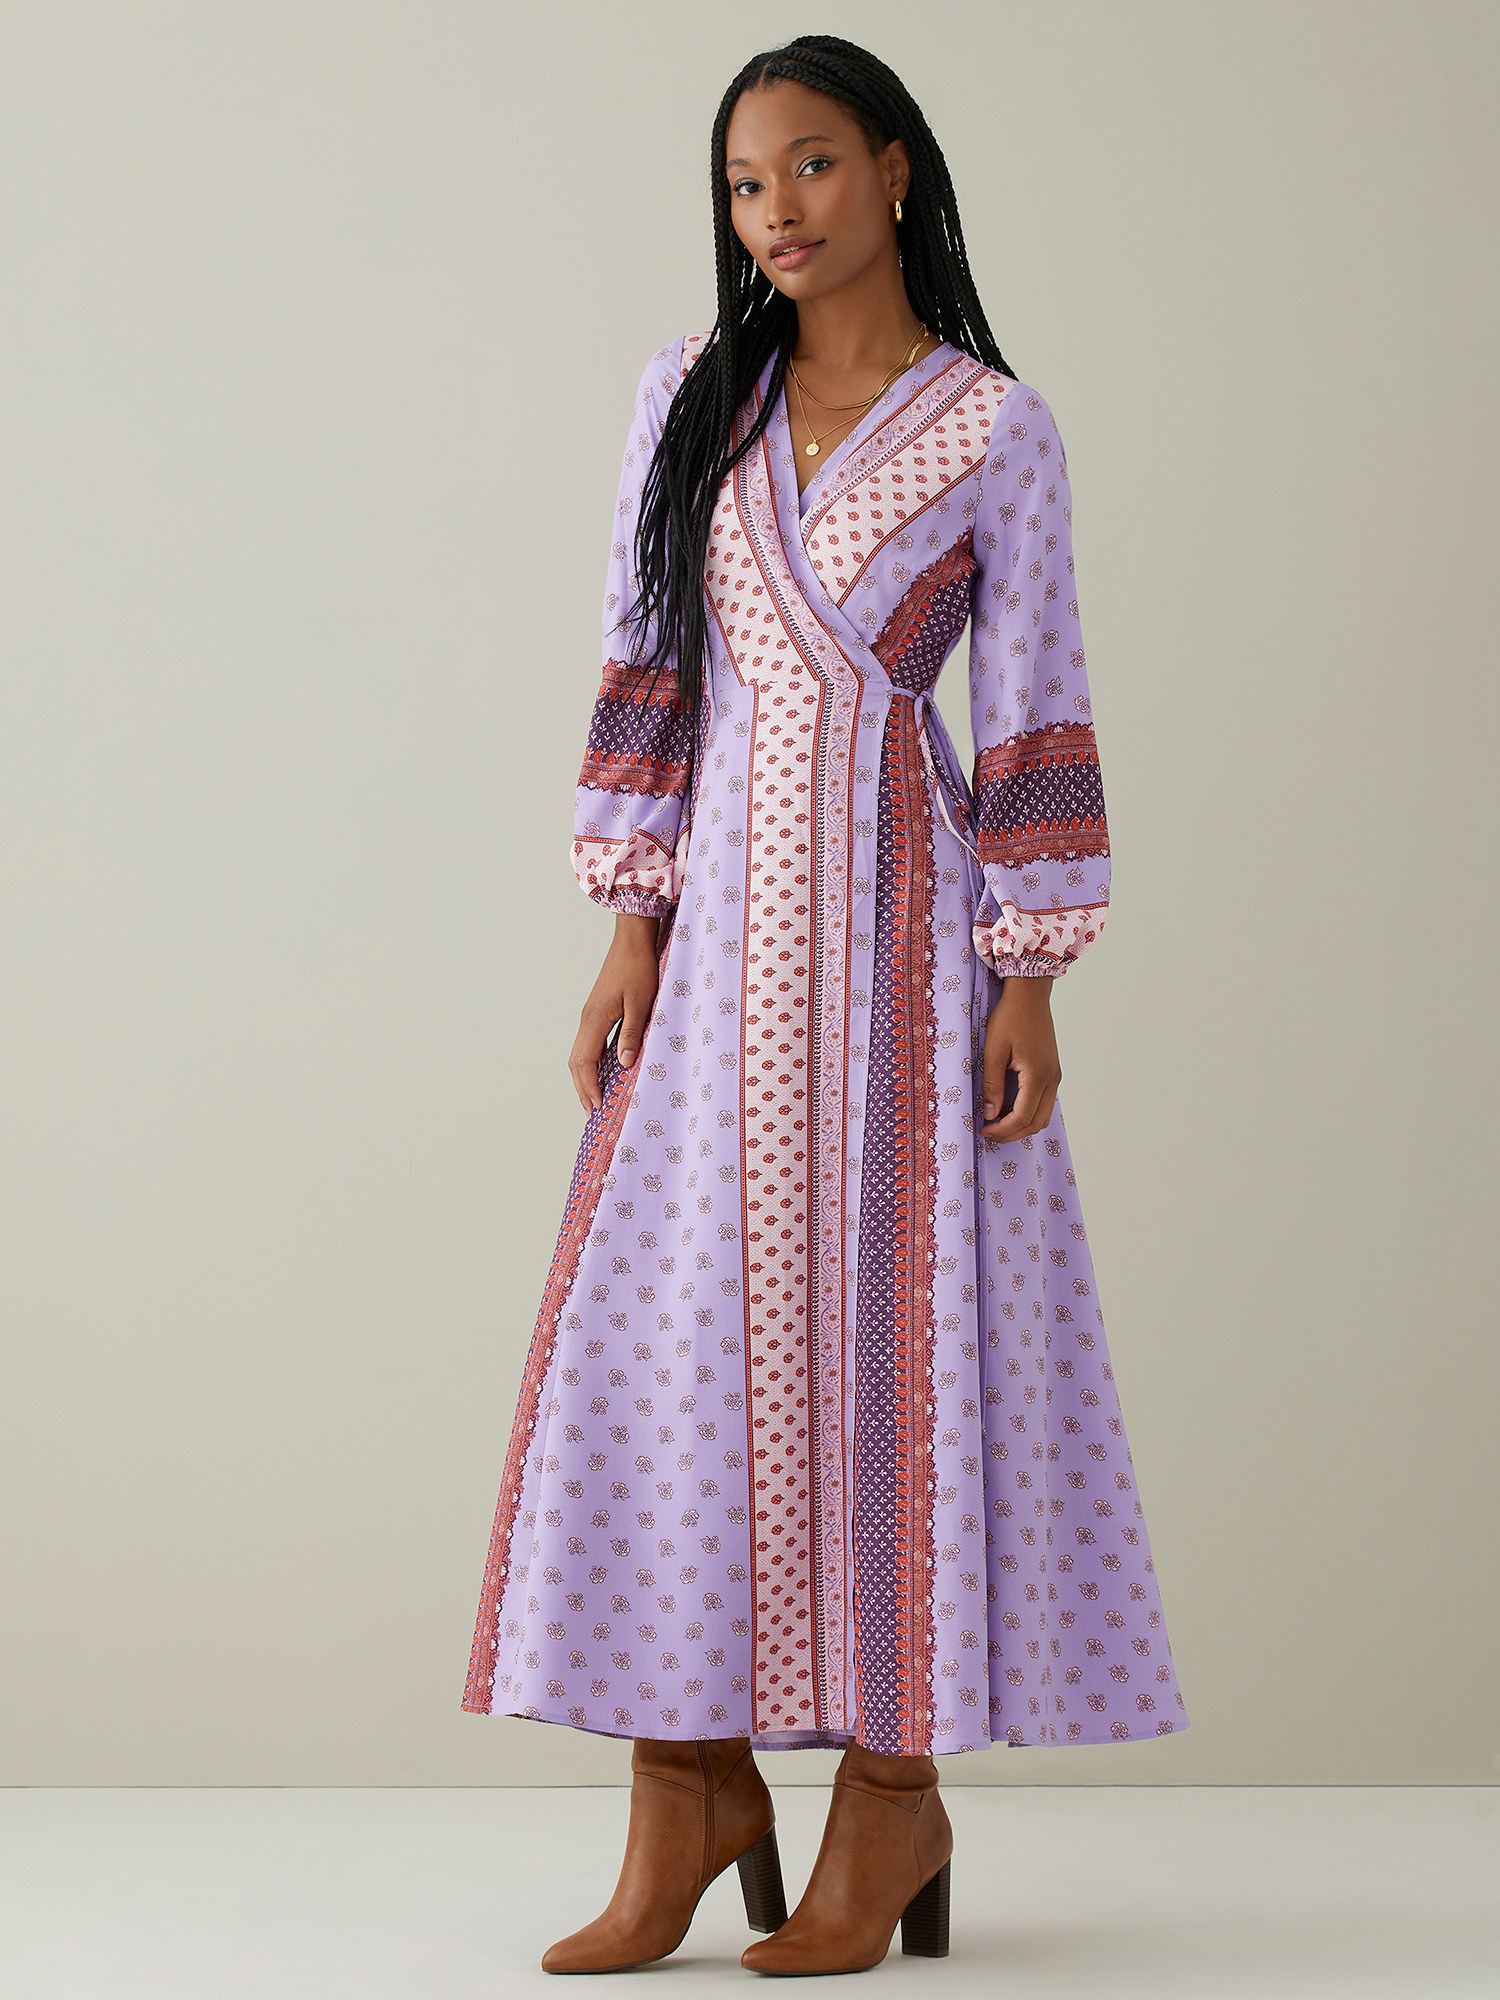 Model wears the lavender printed dress